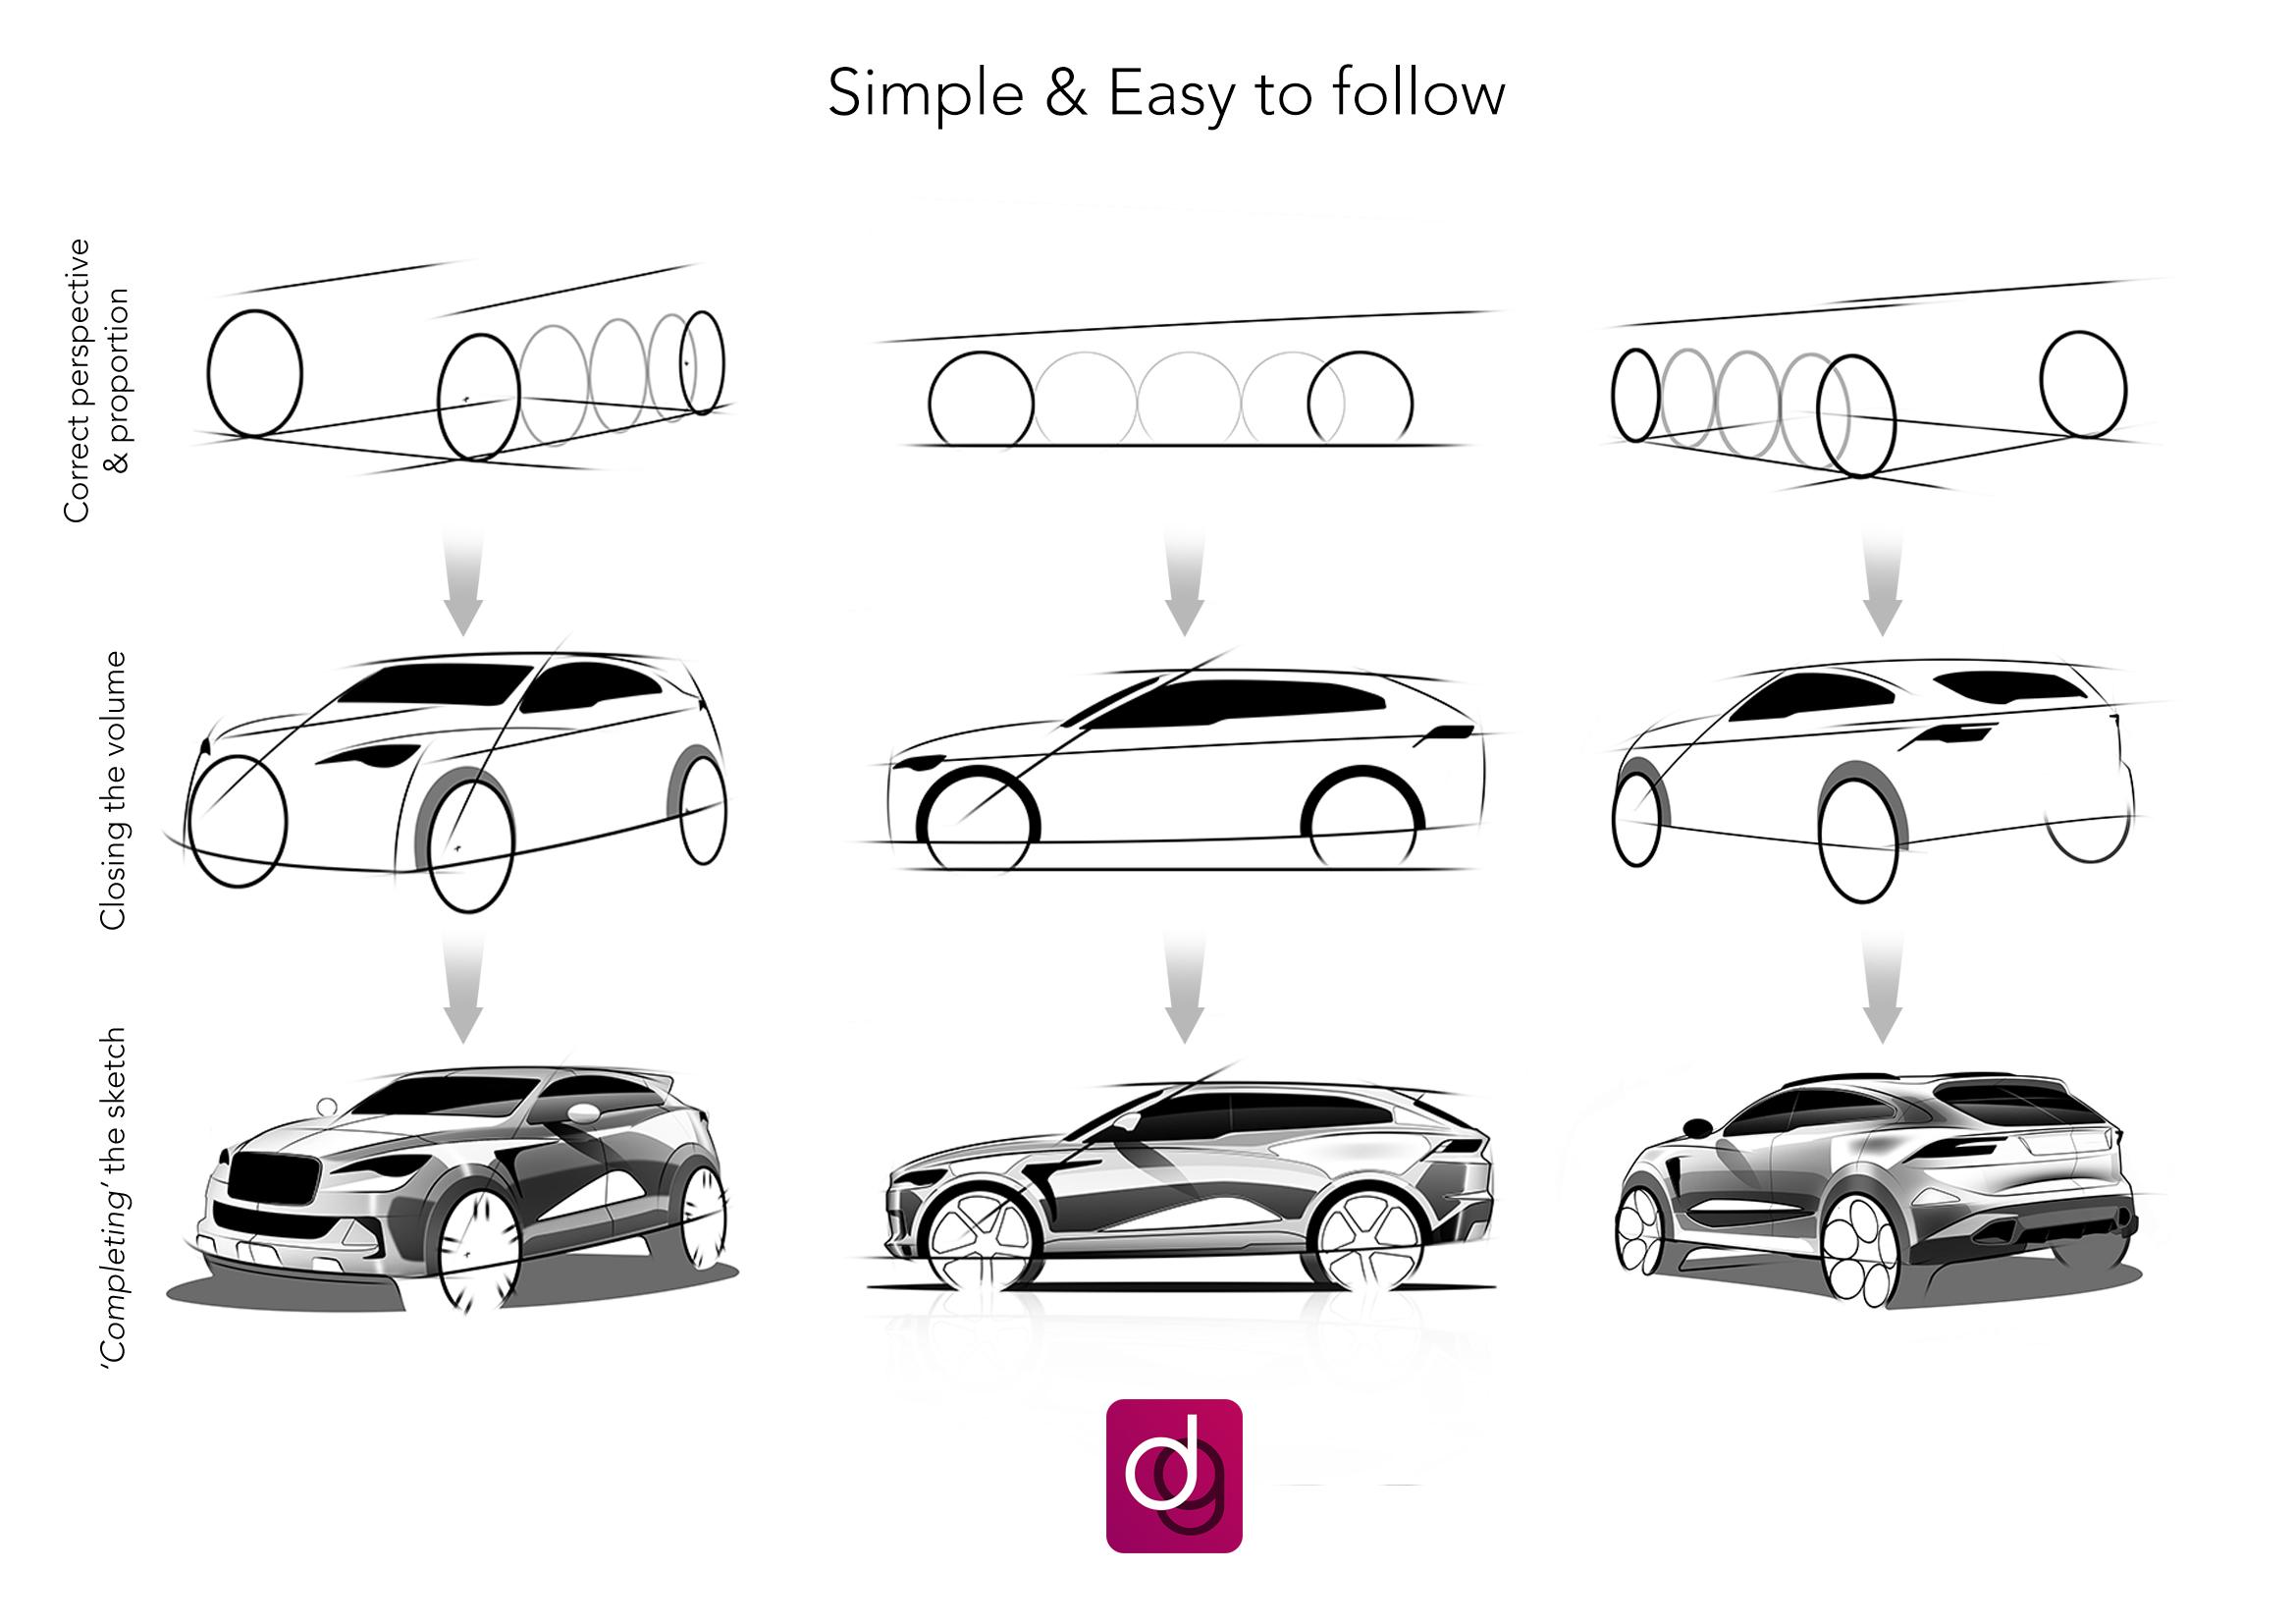 Car rendering tutorial “Car design #2” by xaman_design - Make better art |  CLIP STUDIO TIPS